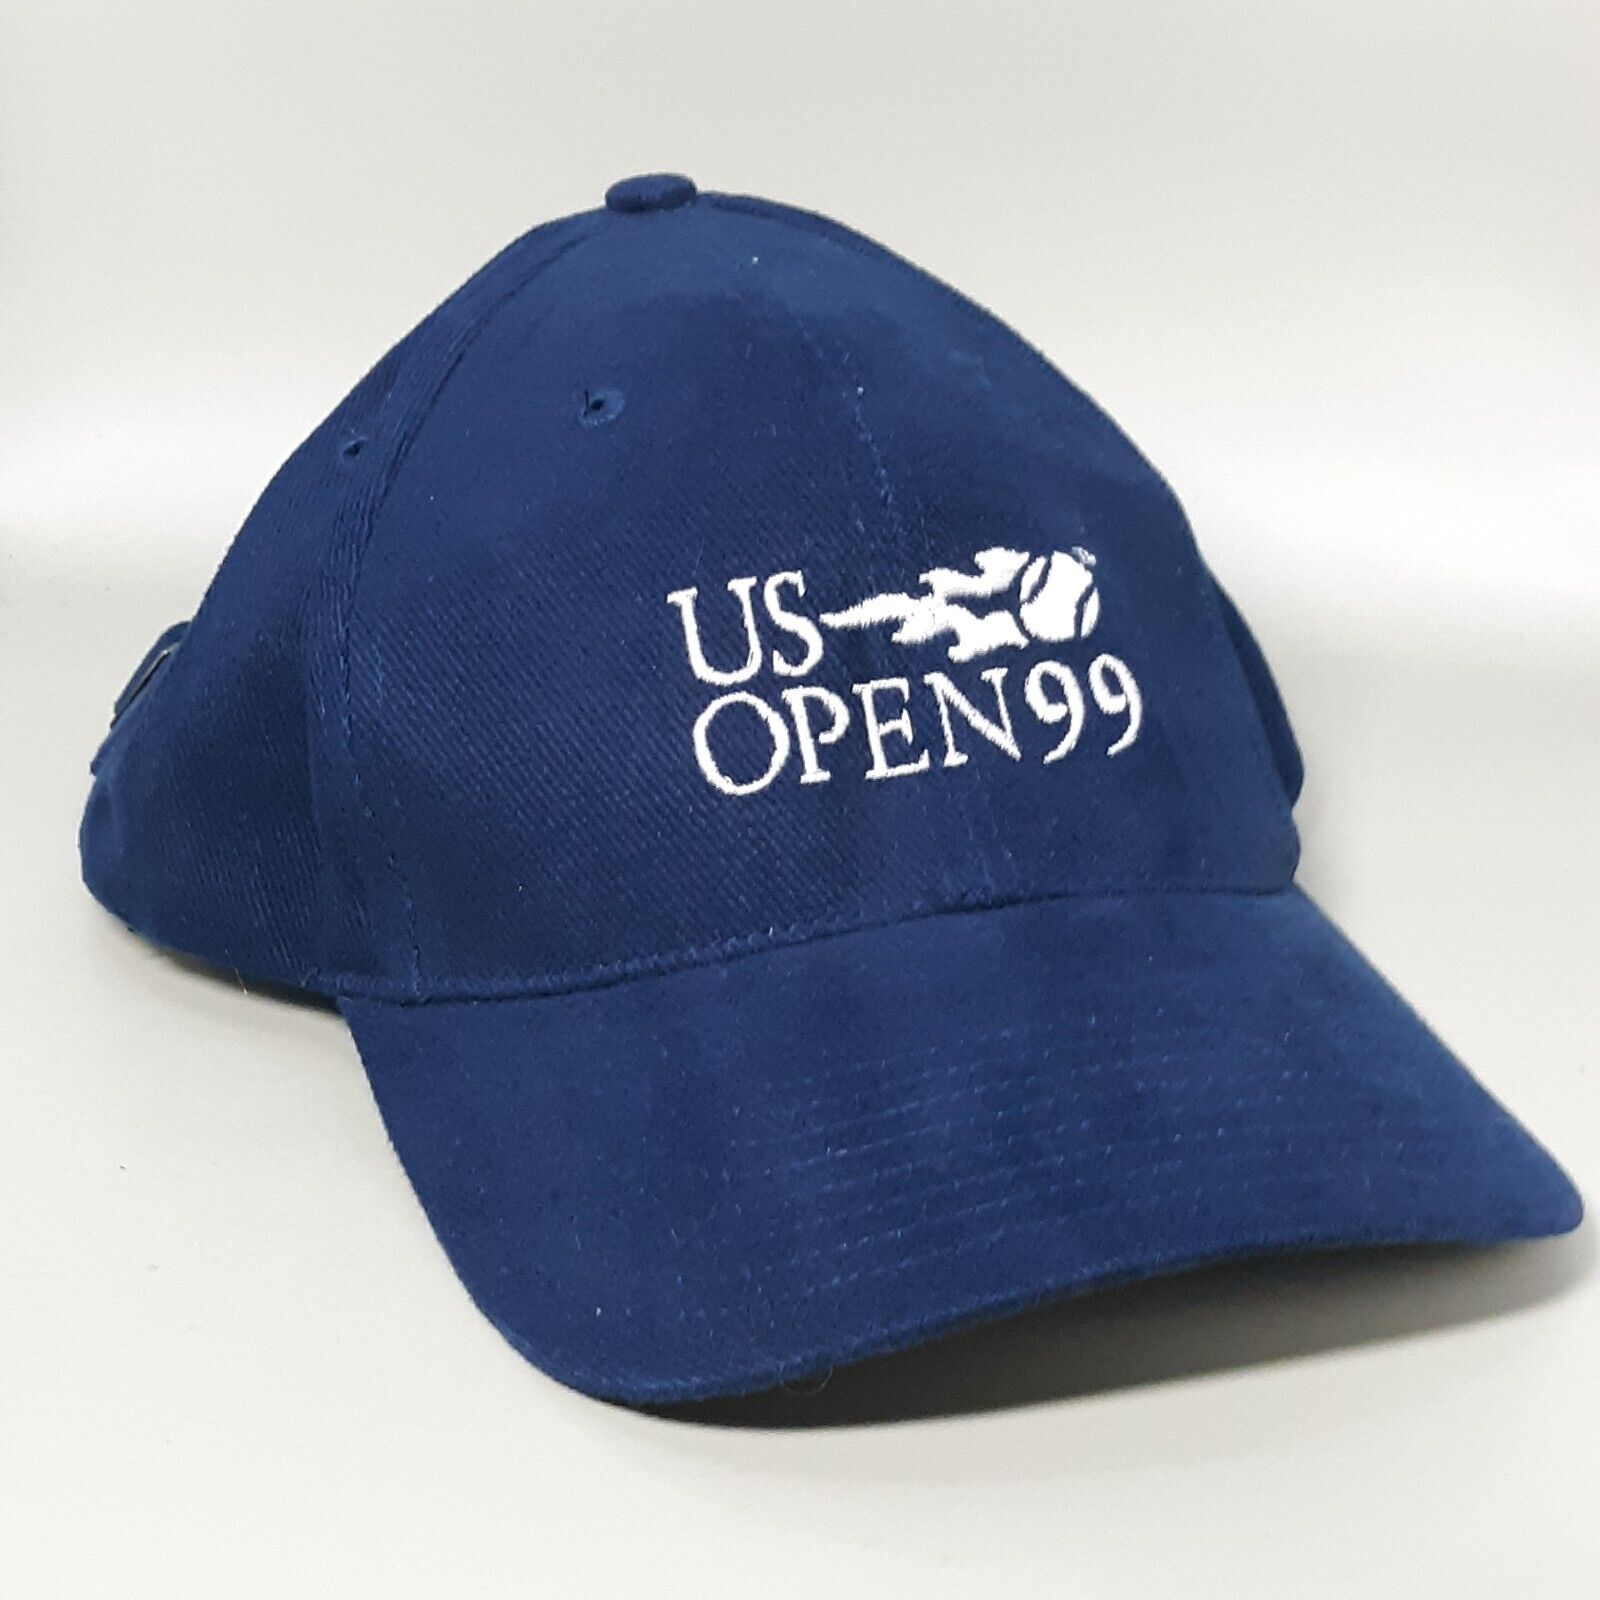 Vintage u. S. Open tennis 1999 hat infiniti sponsor new licensed product blue